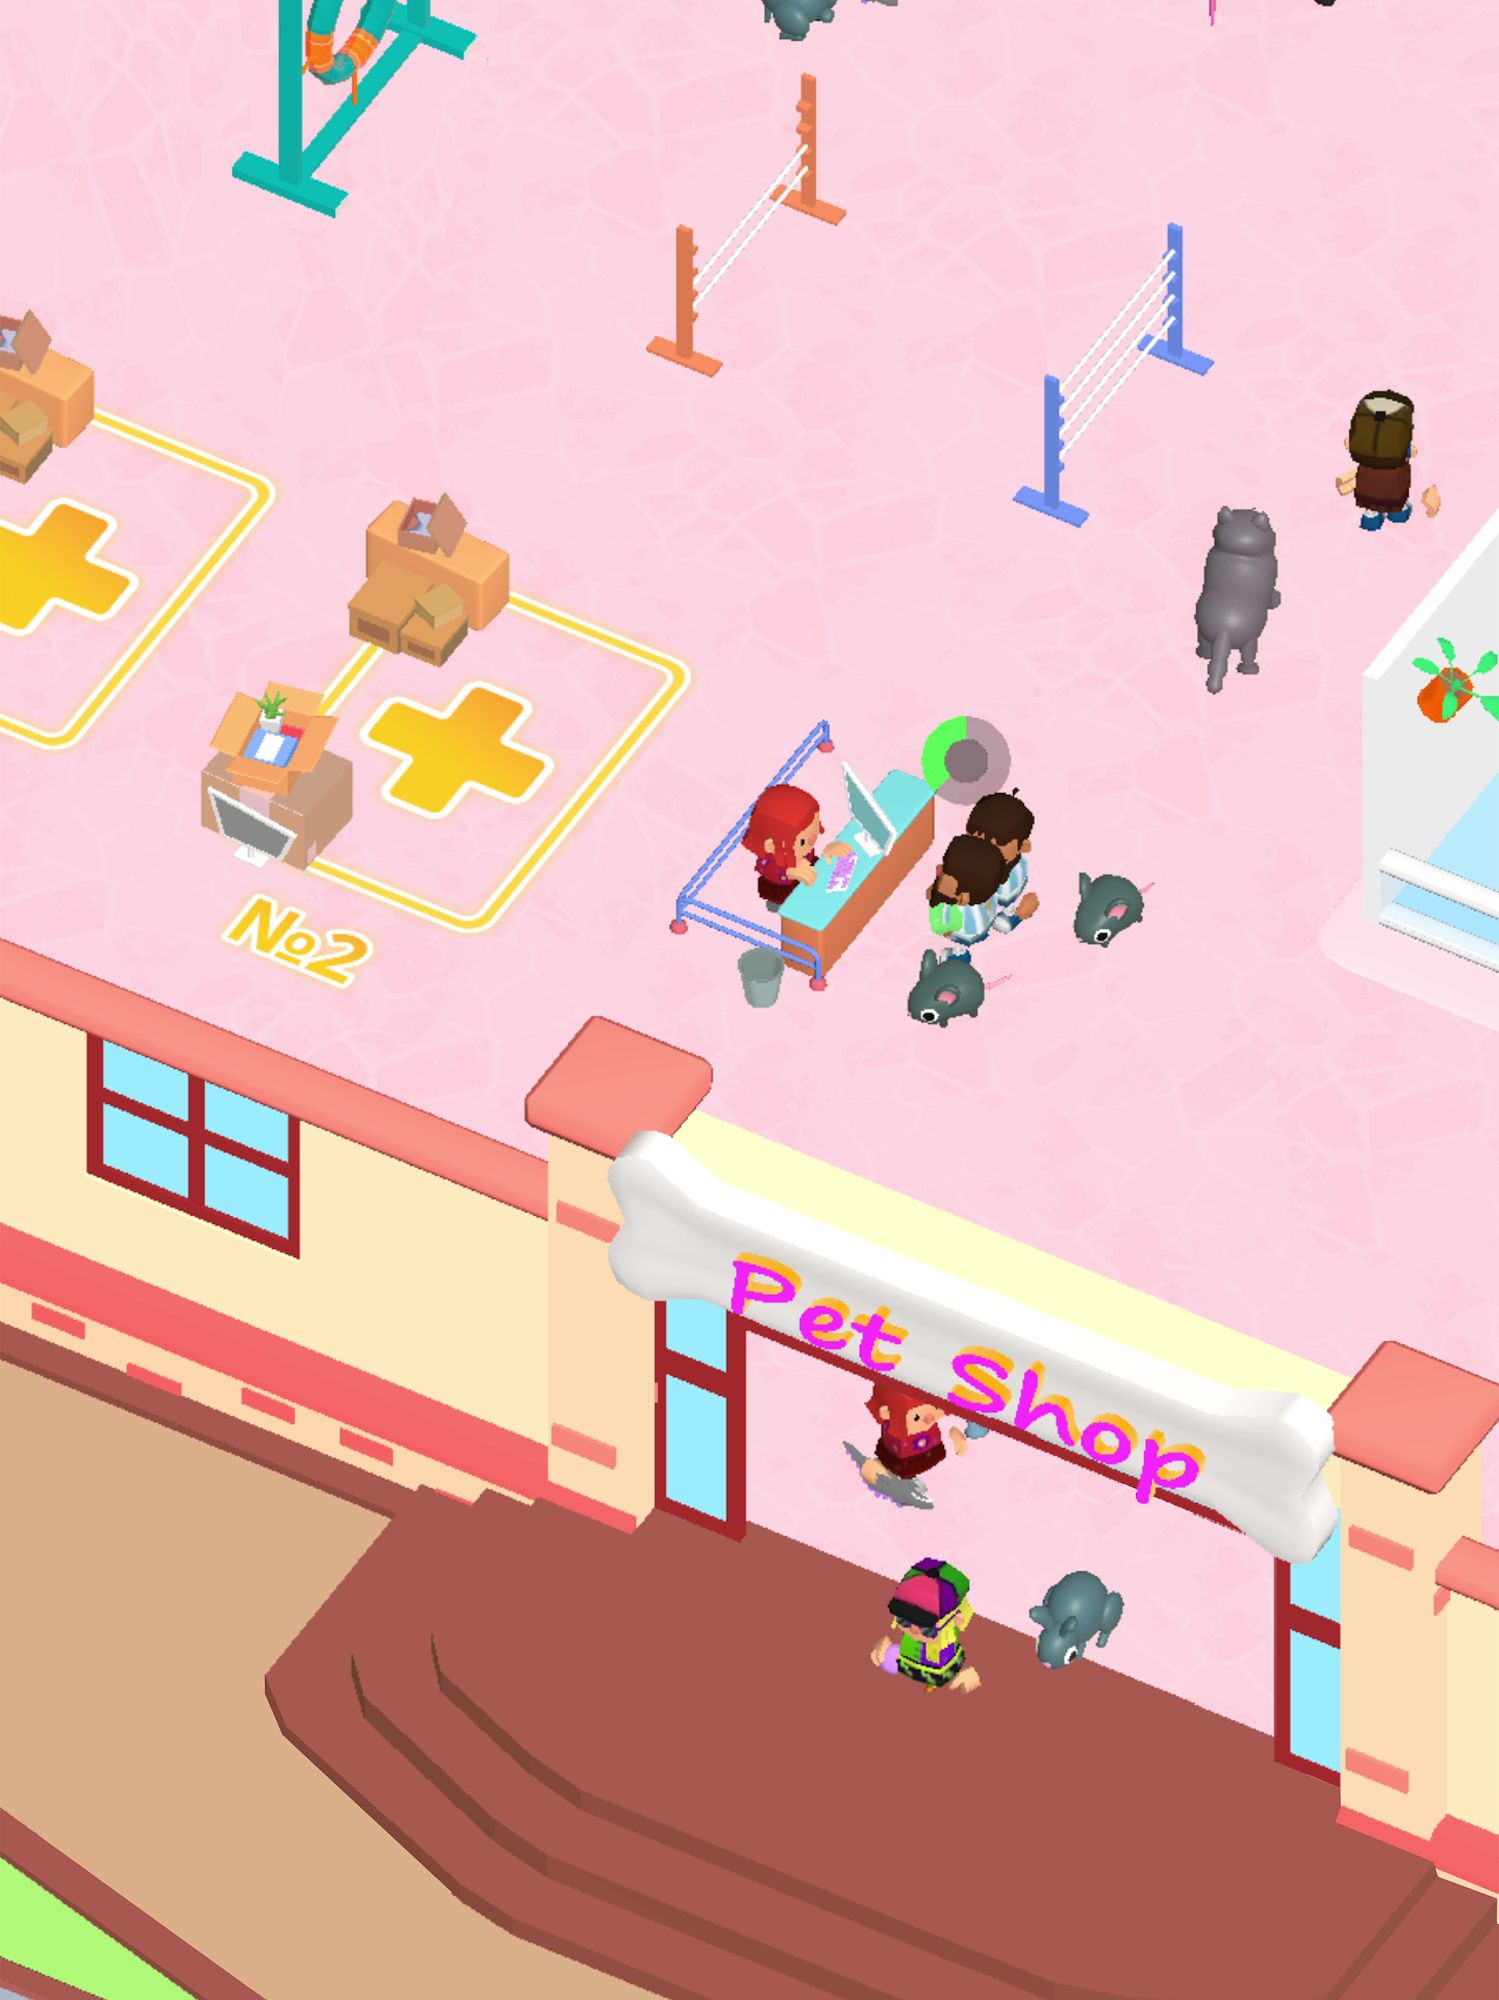 Scarica Idle Pet Shop -  Animal Game gratis per Android.